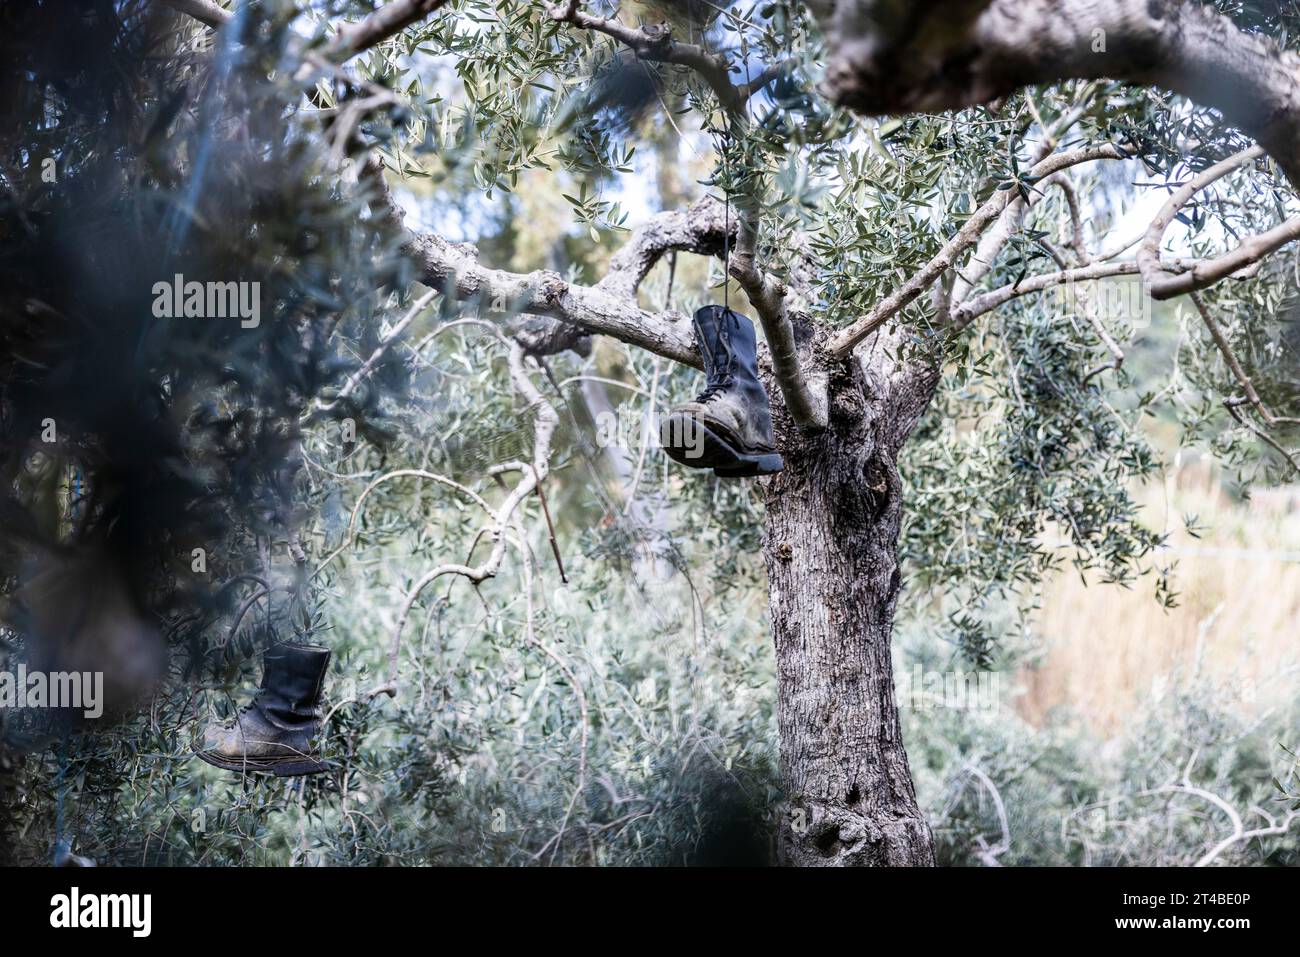 Old boots and weathered animal skull hanging in an olive tree to deter birds, Bari Sardo, Ogliastra, Sardinia, Italy Stock Photo